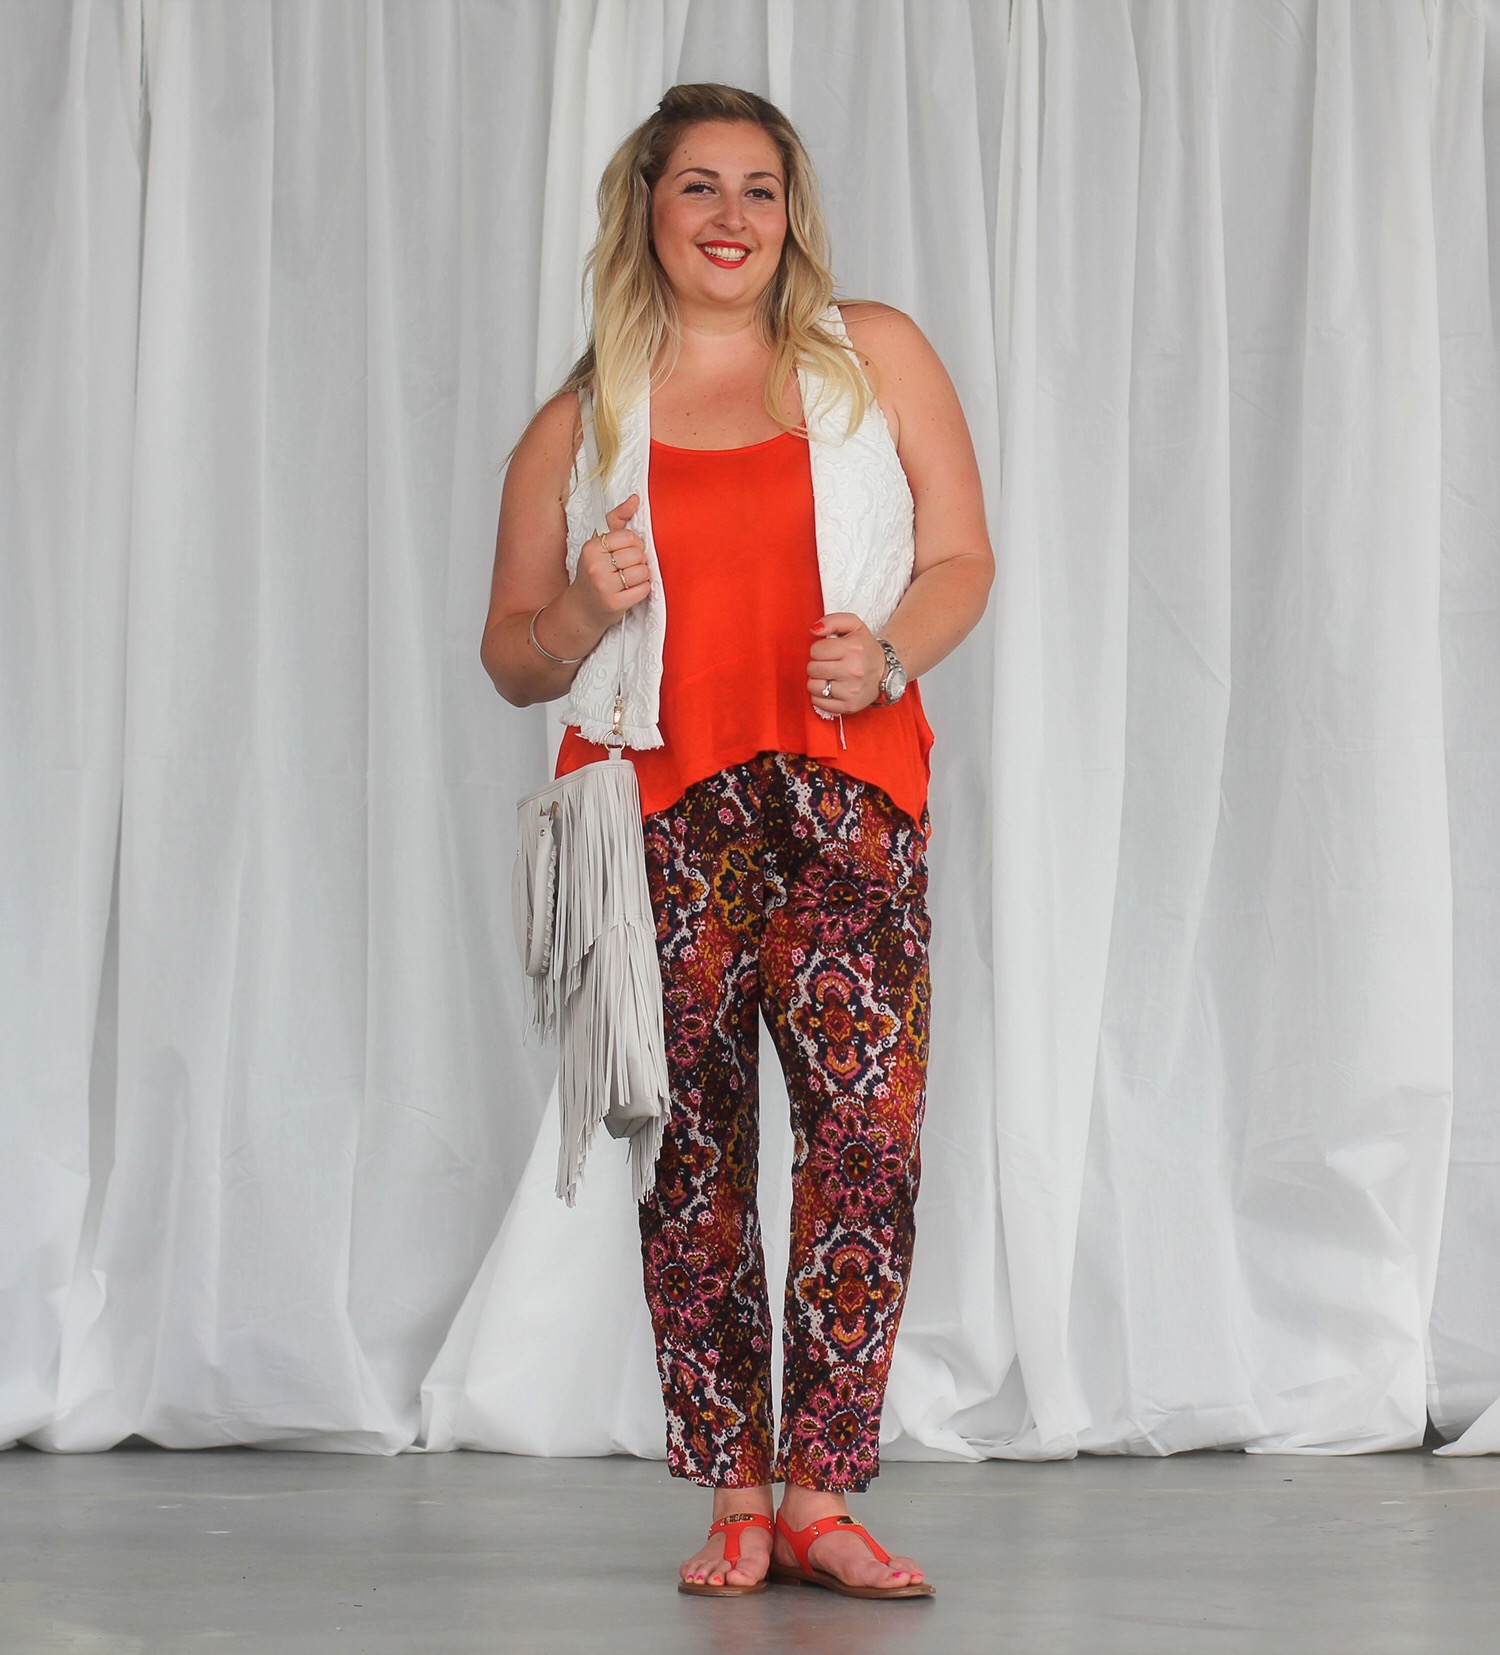 H&M Bayshore Plus Size Fashion Ottawa Fashion blog mode XLusive Chantsy Chantal Sarkisian